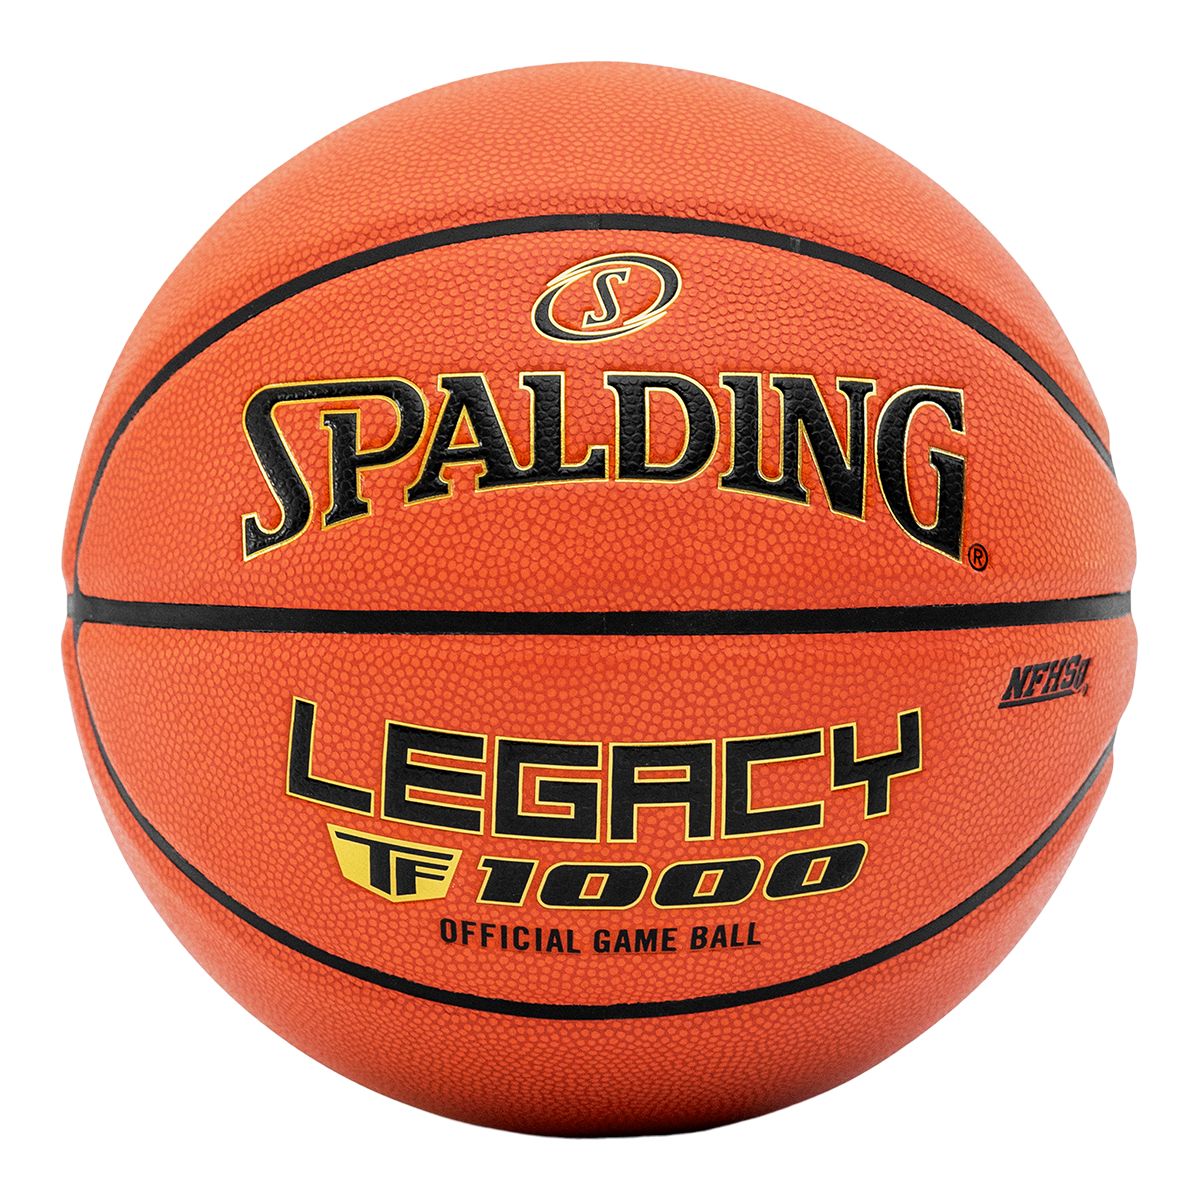 Spalding Legacy TF-1000 Basketball, Size 6, Indoor | SportChek